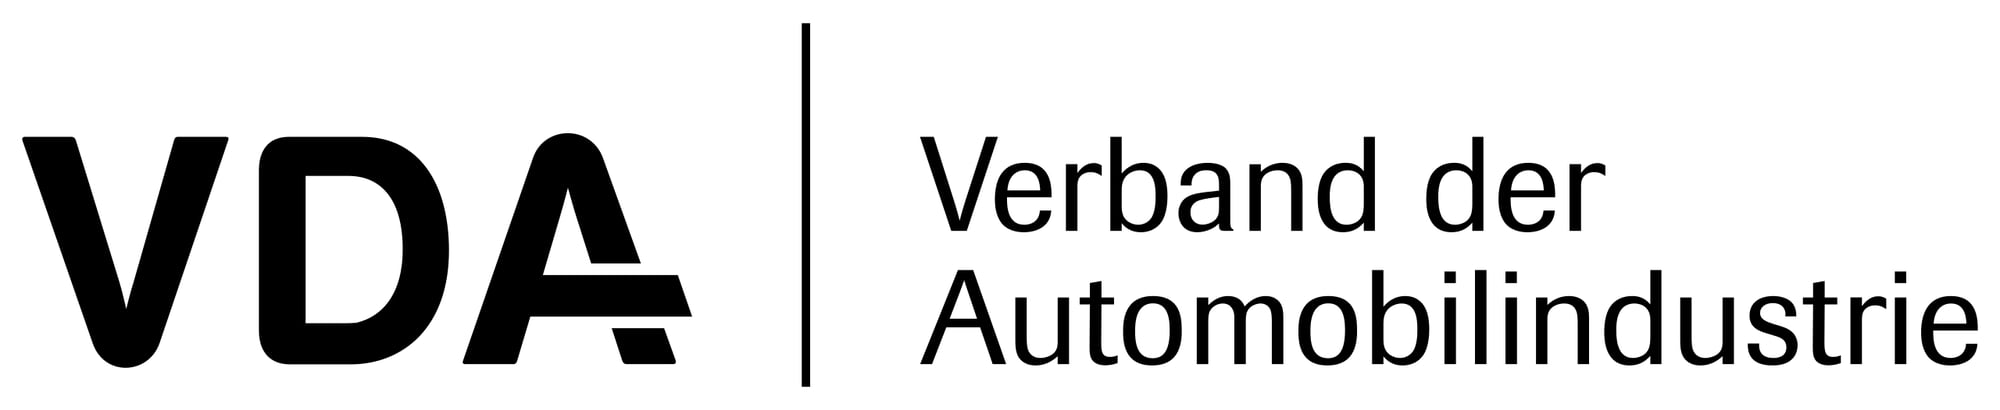 Testimonials-VDA Logo